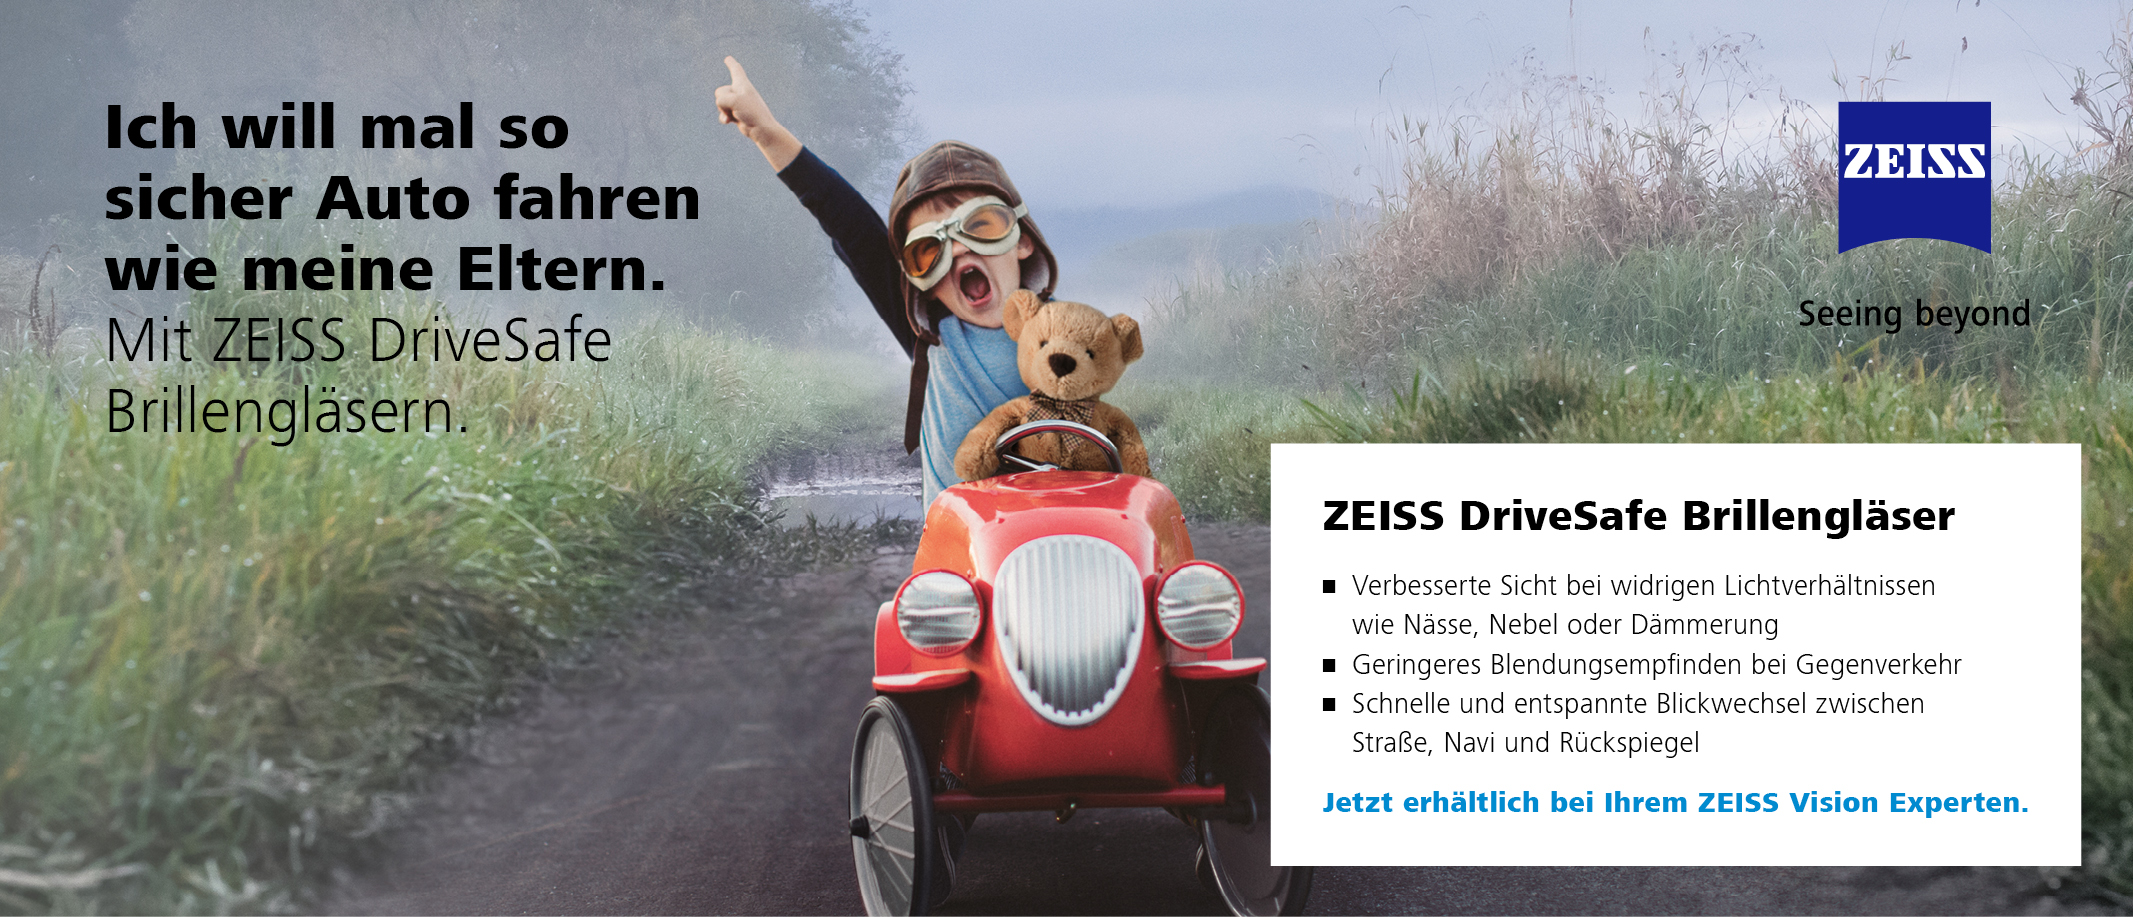 Zeiss Drive Safe